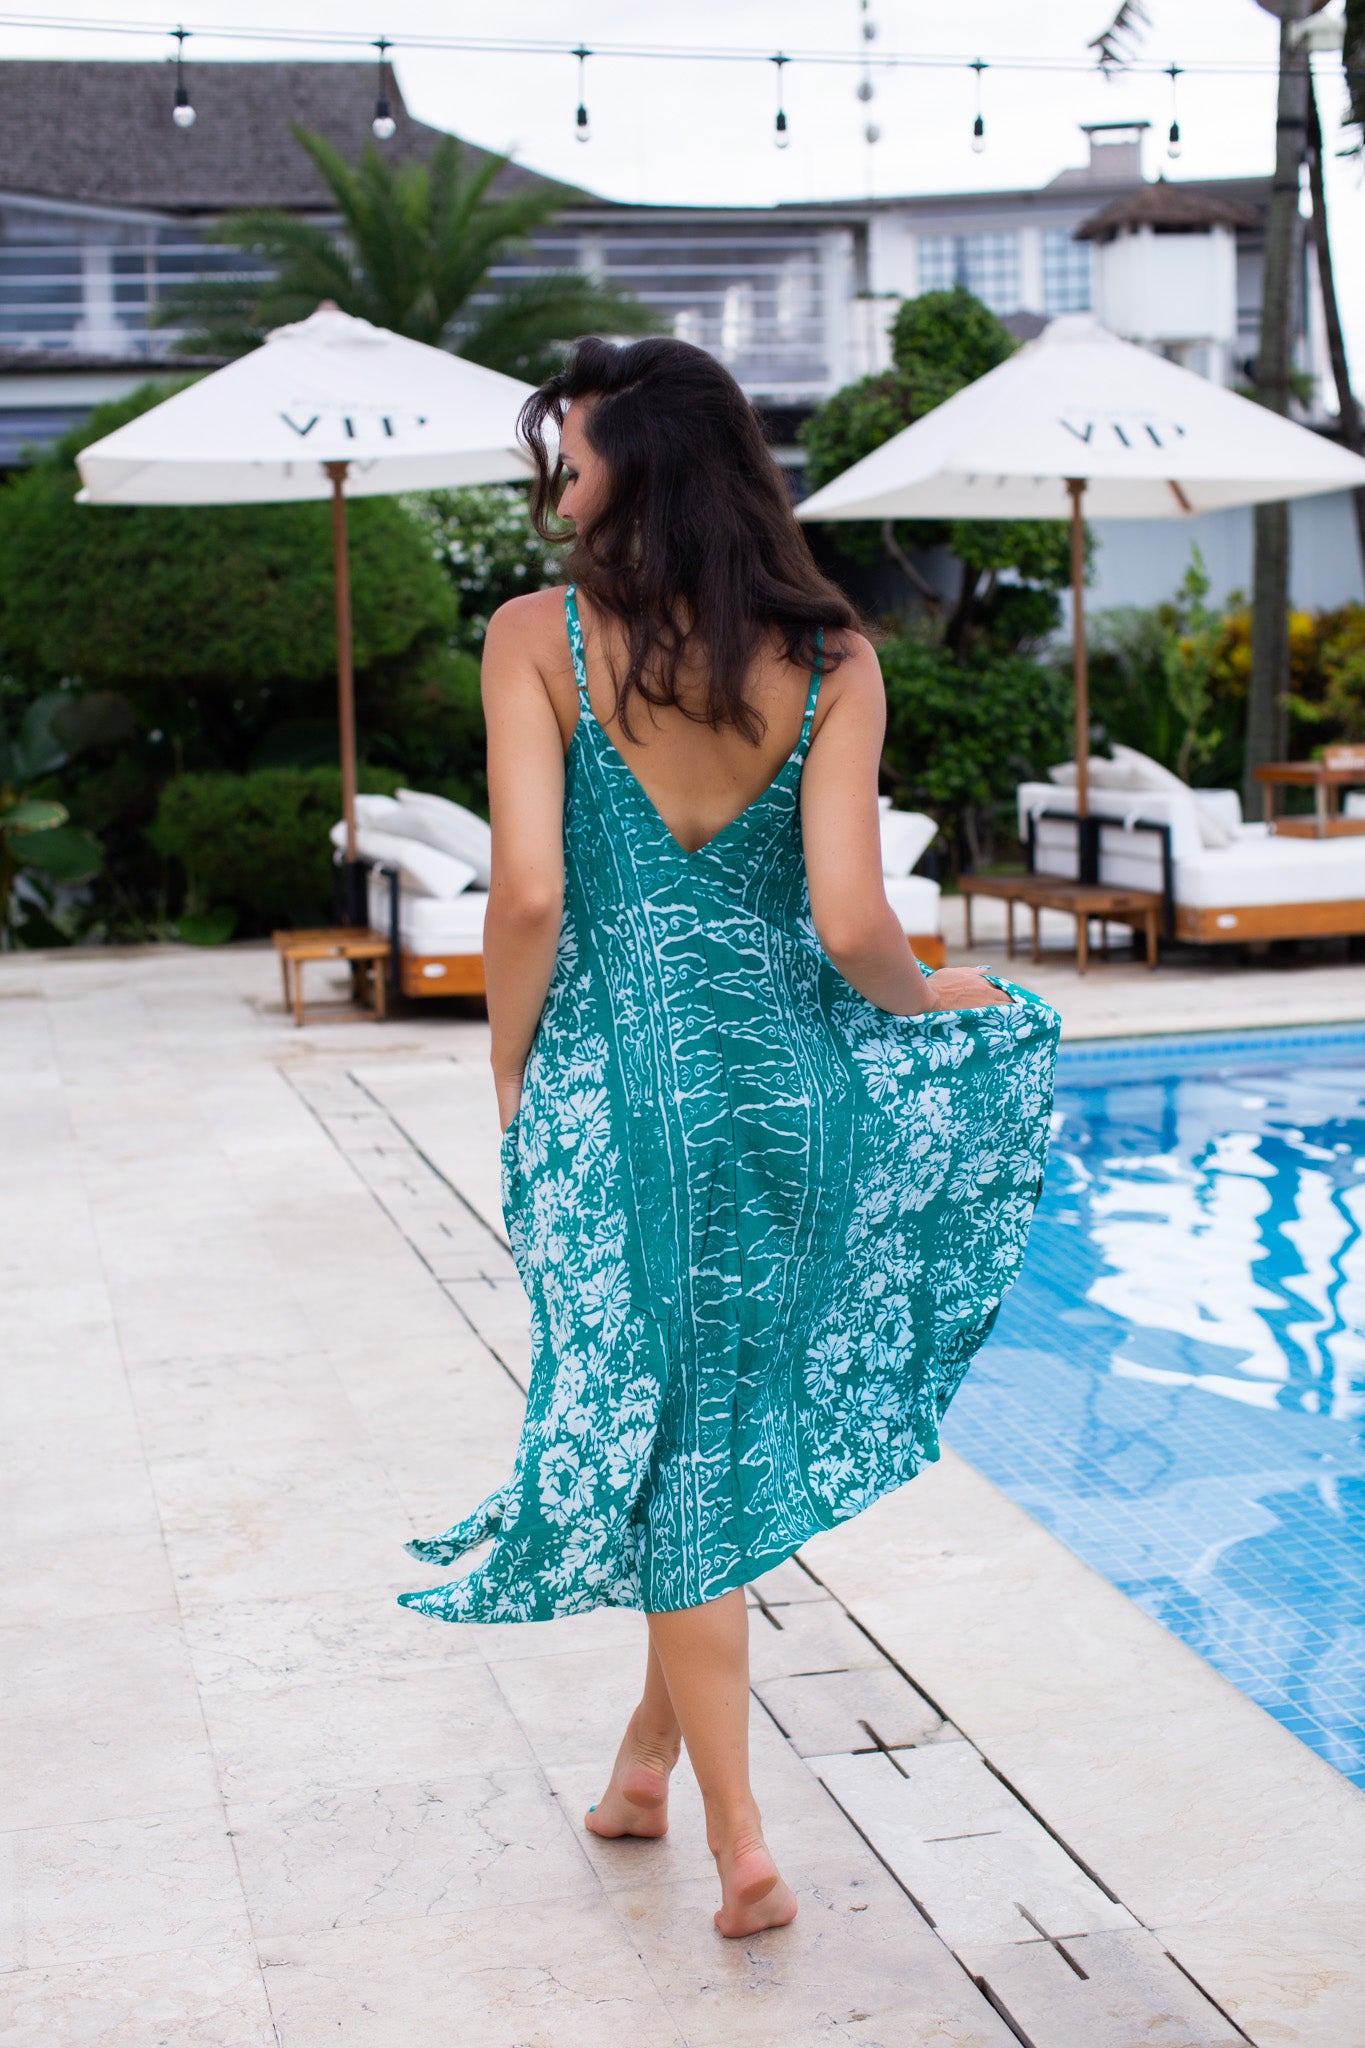 Dresses supplier garment in Bali Indonesia swimsuits bikini beachwear